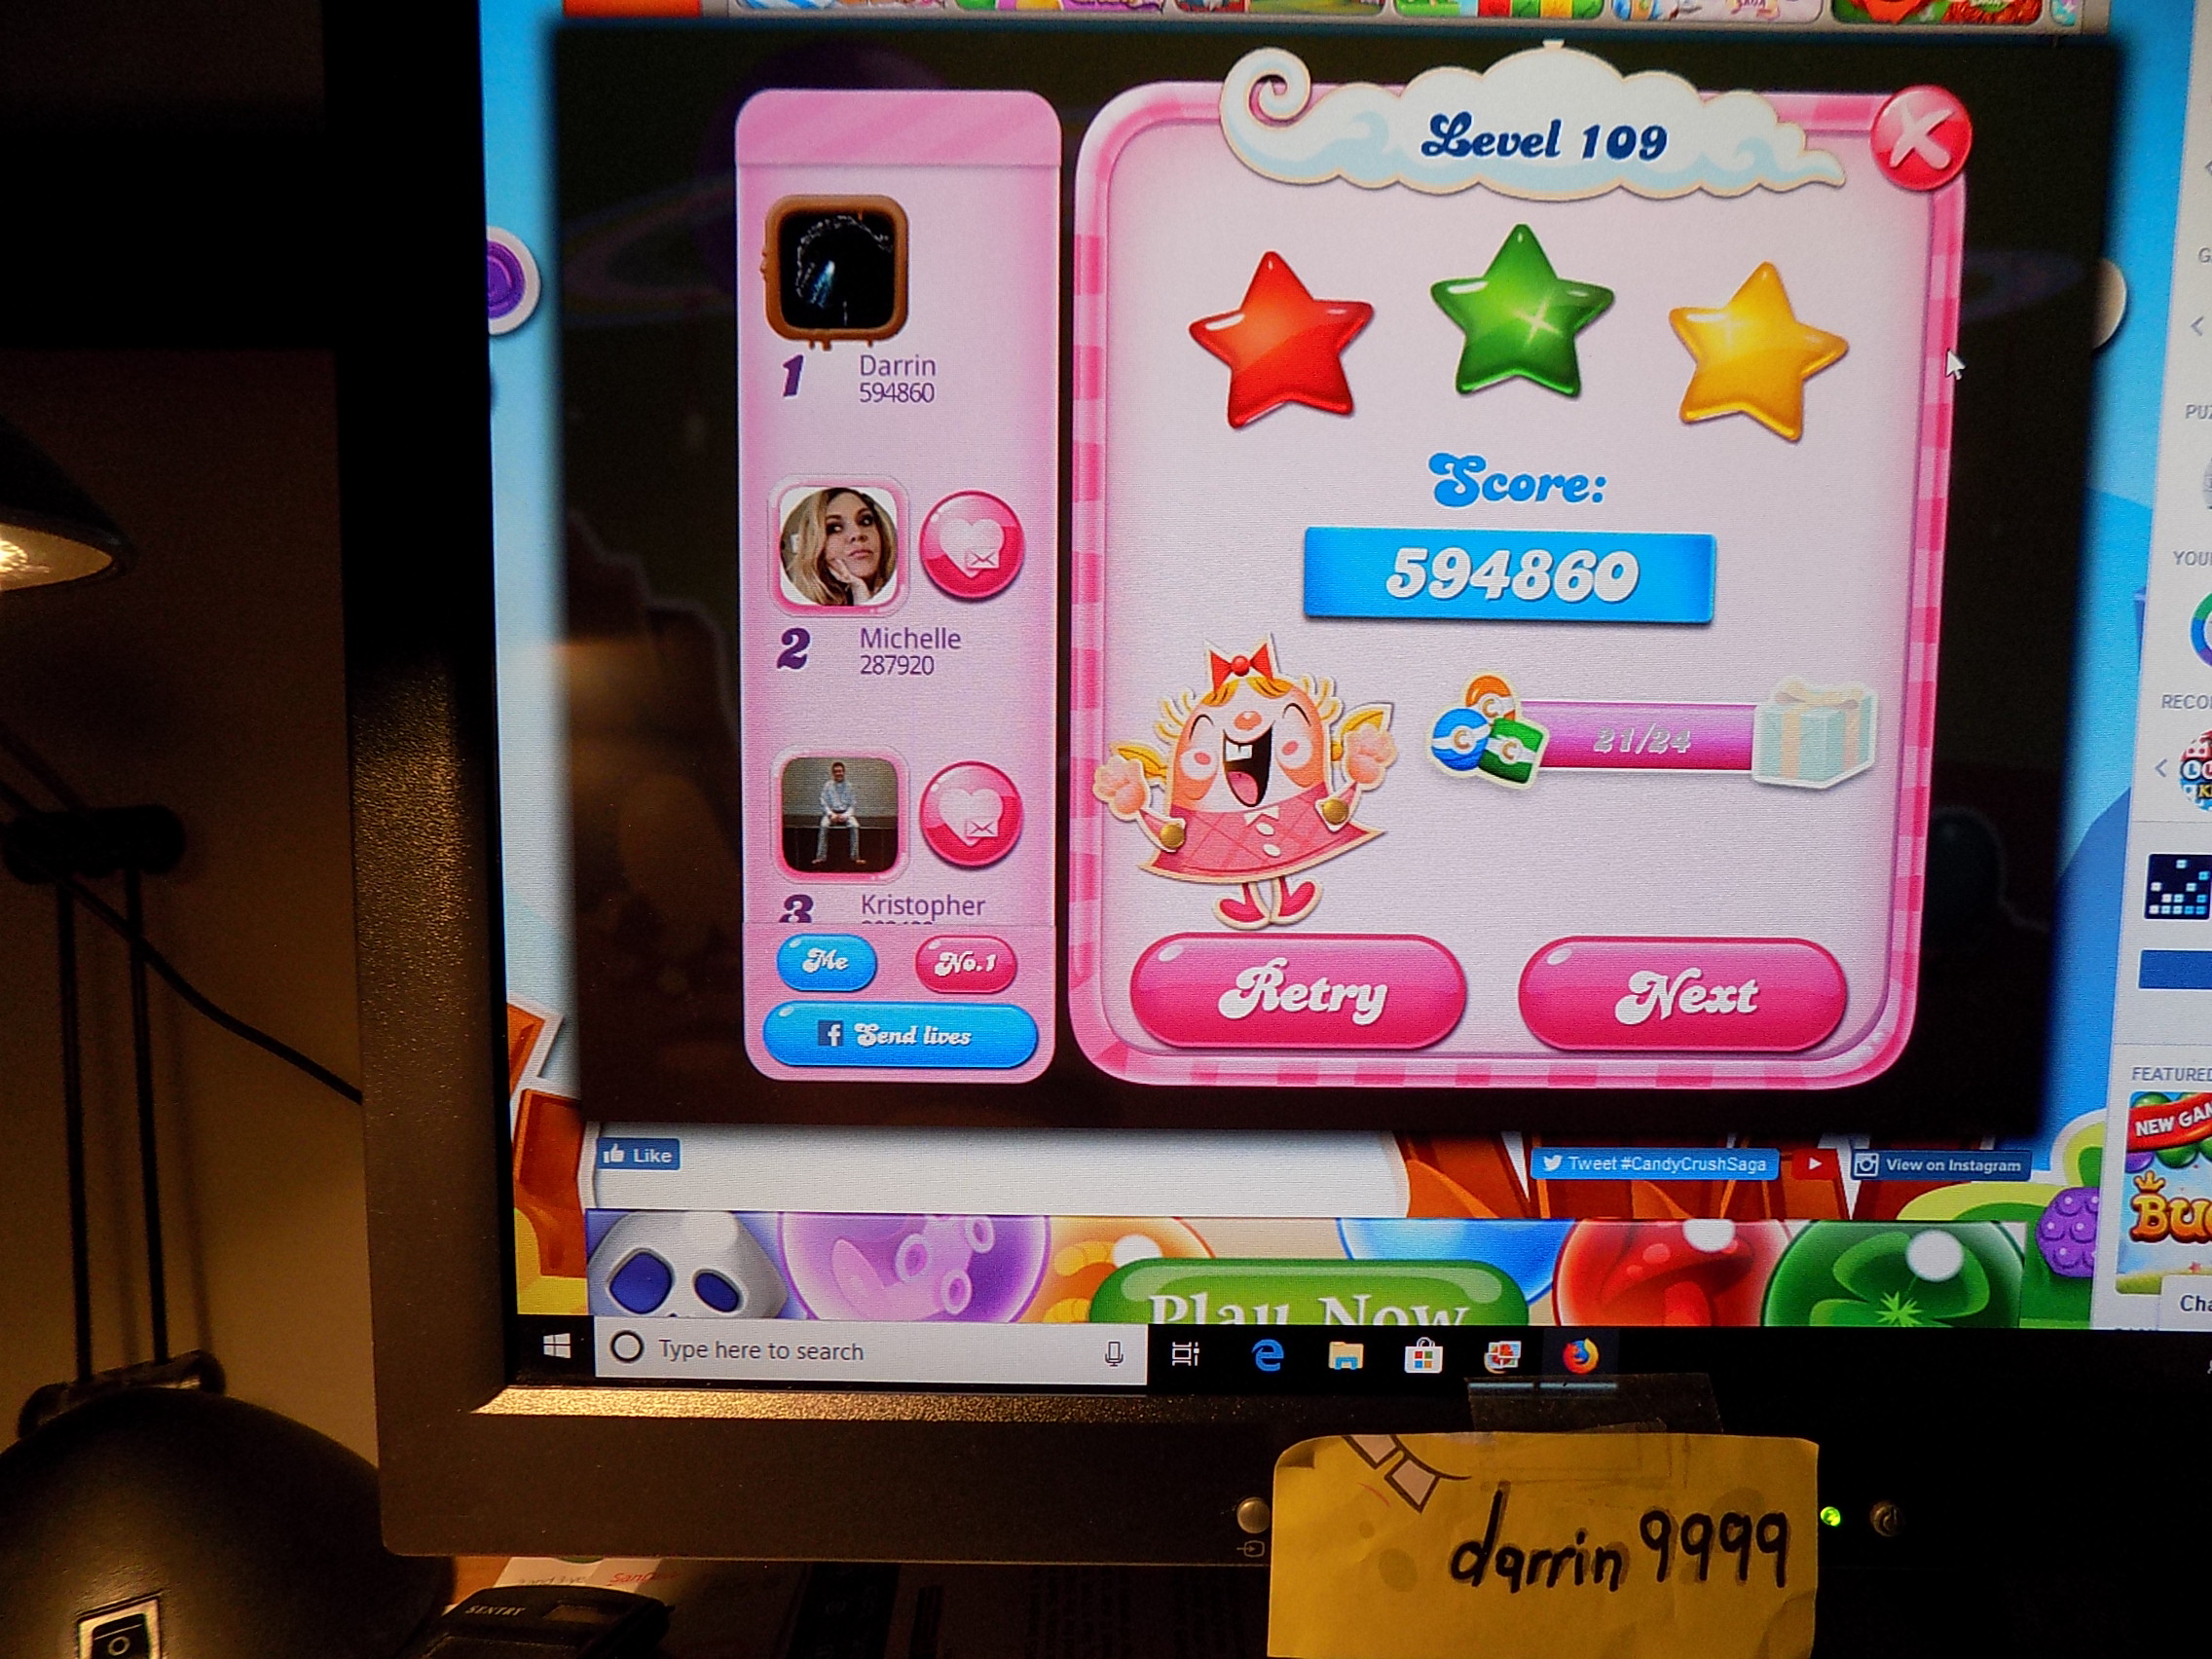 Candy Crush Saga: Level 109 594,860 points